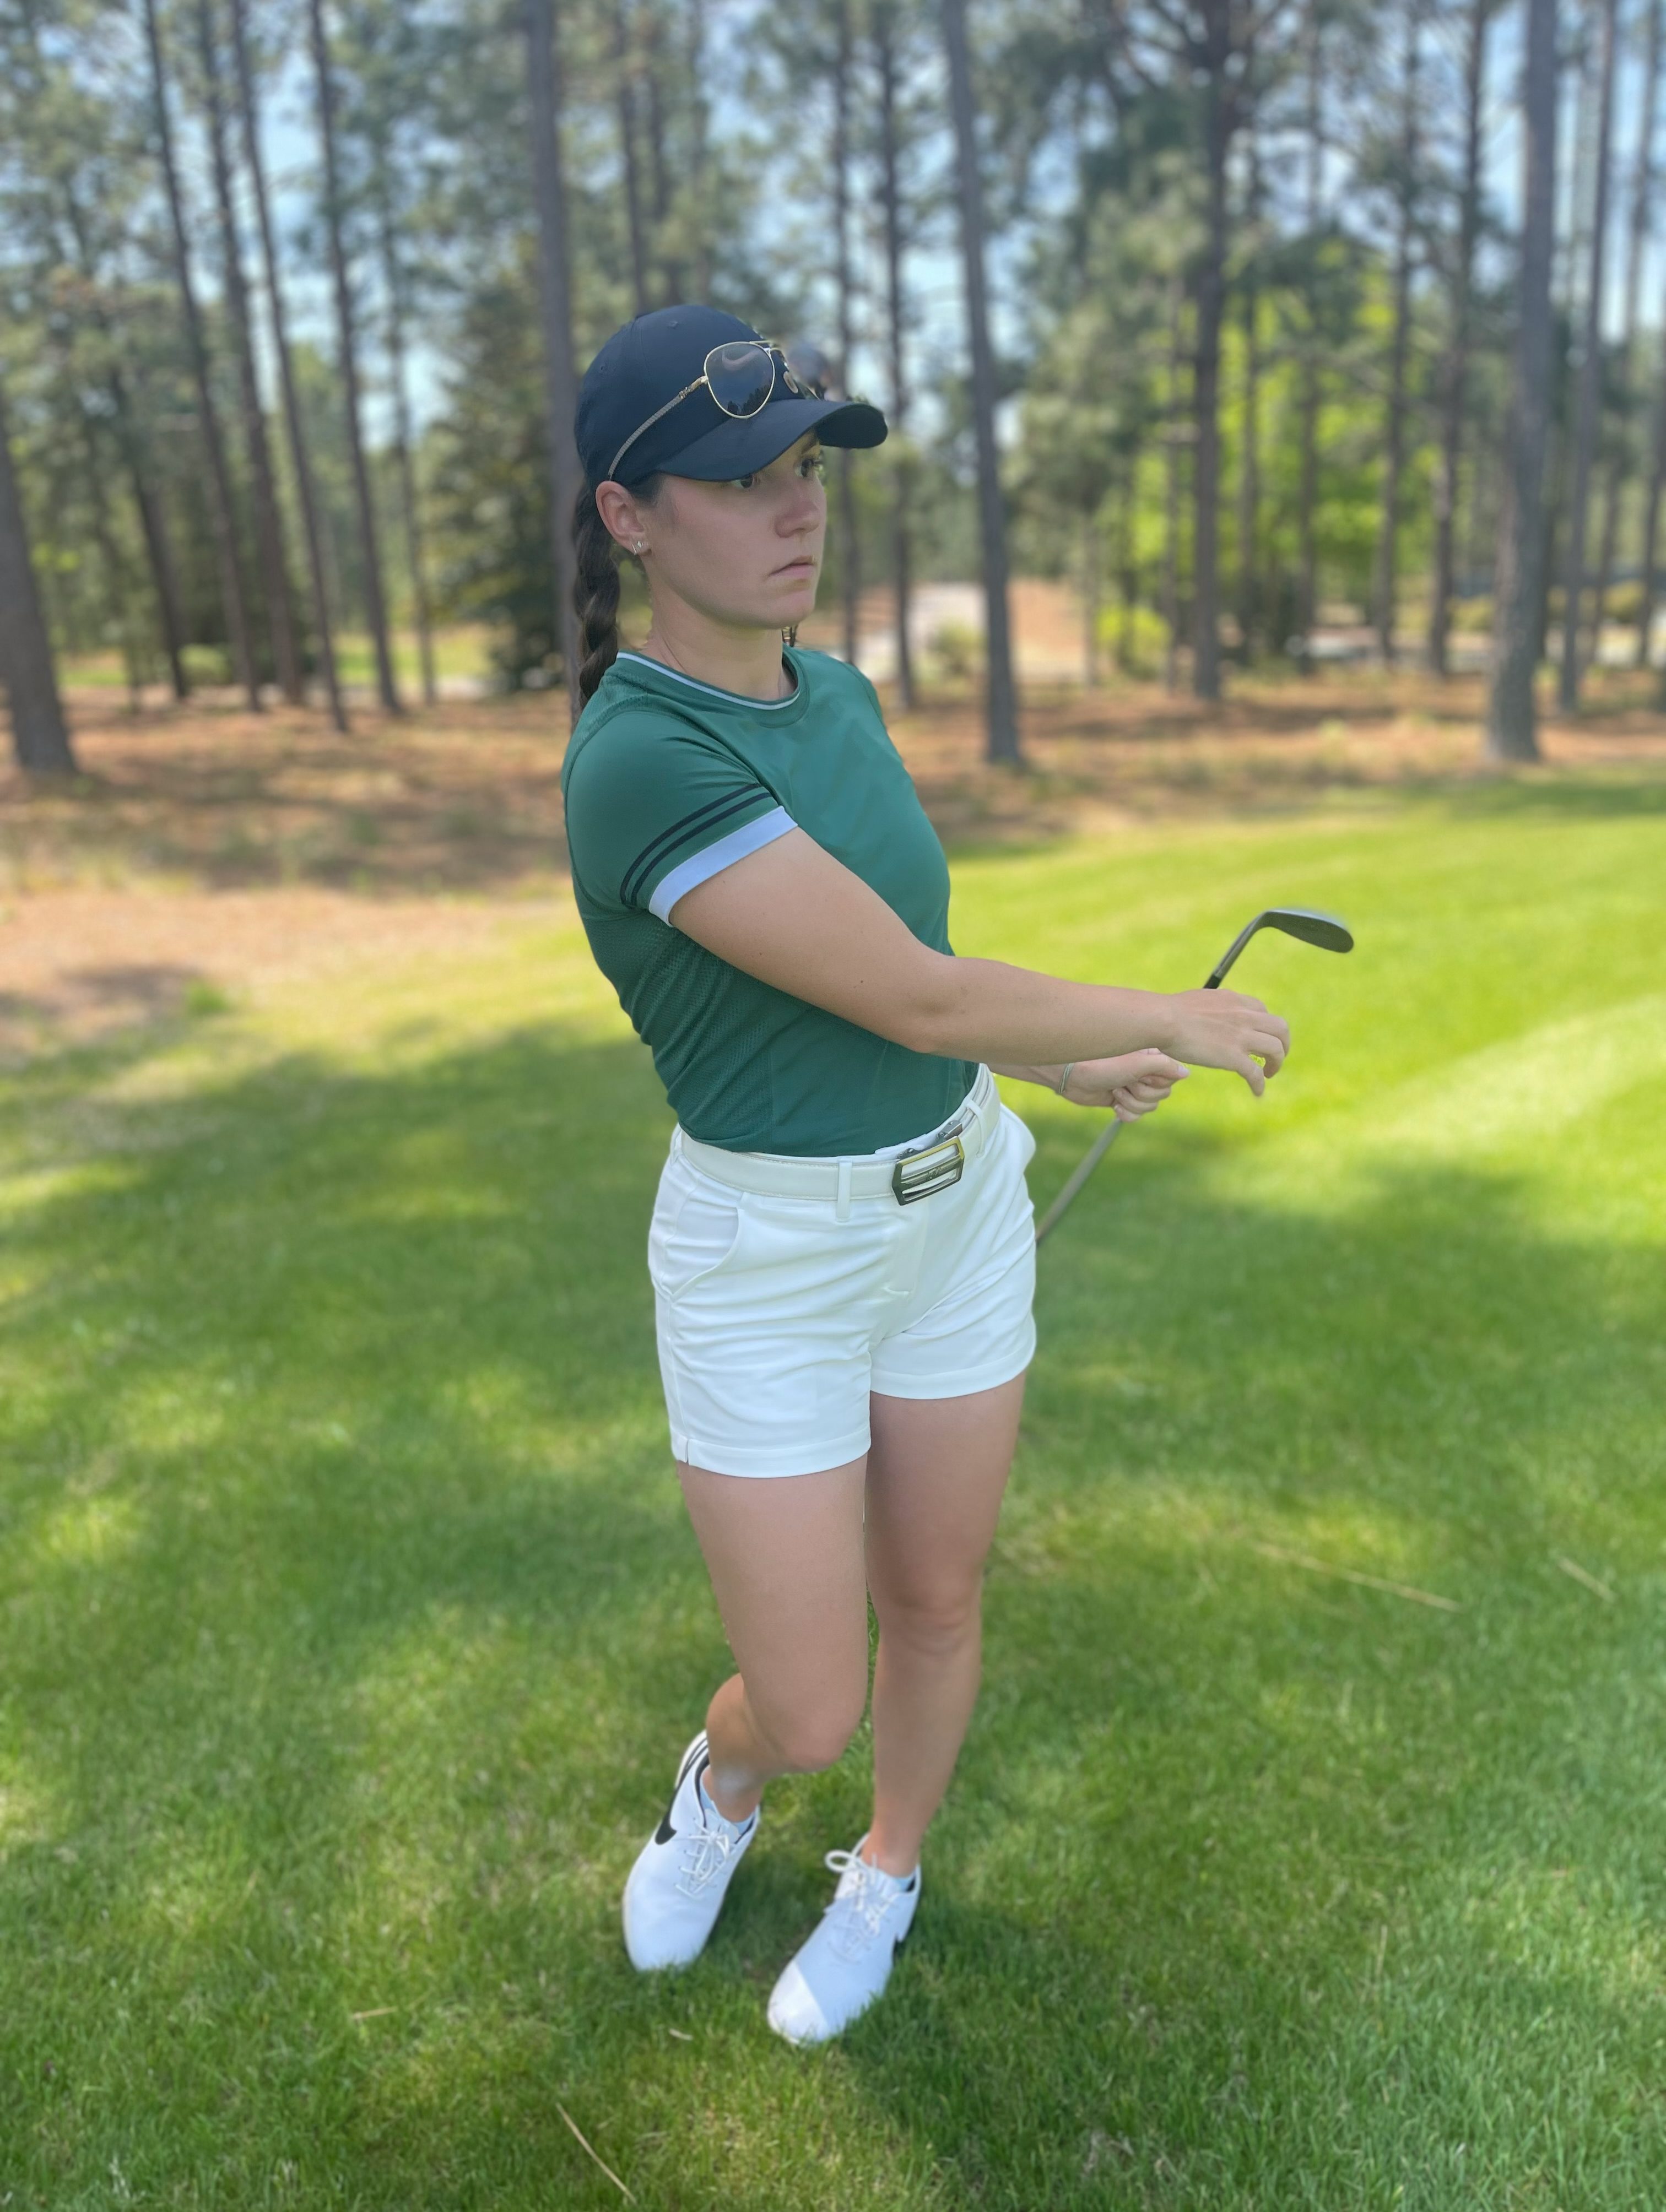 Golf Expert Sara Bryant